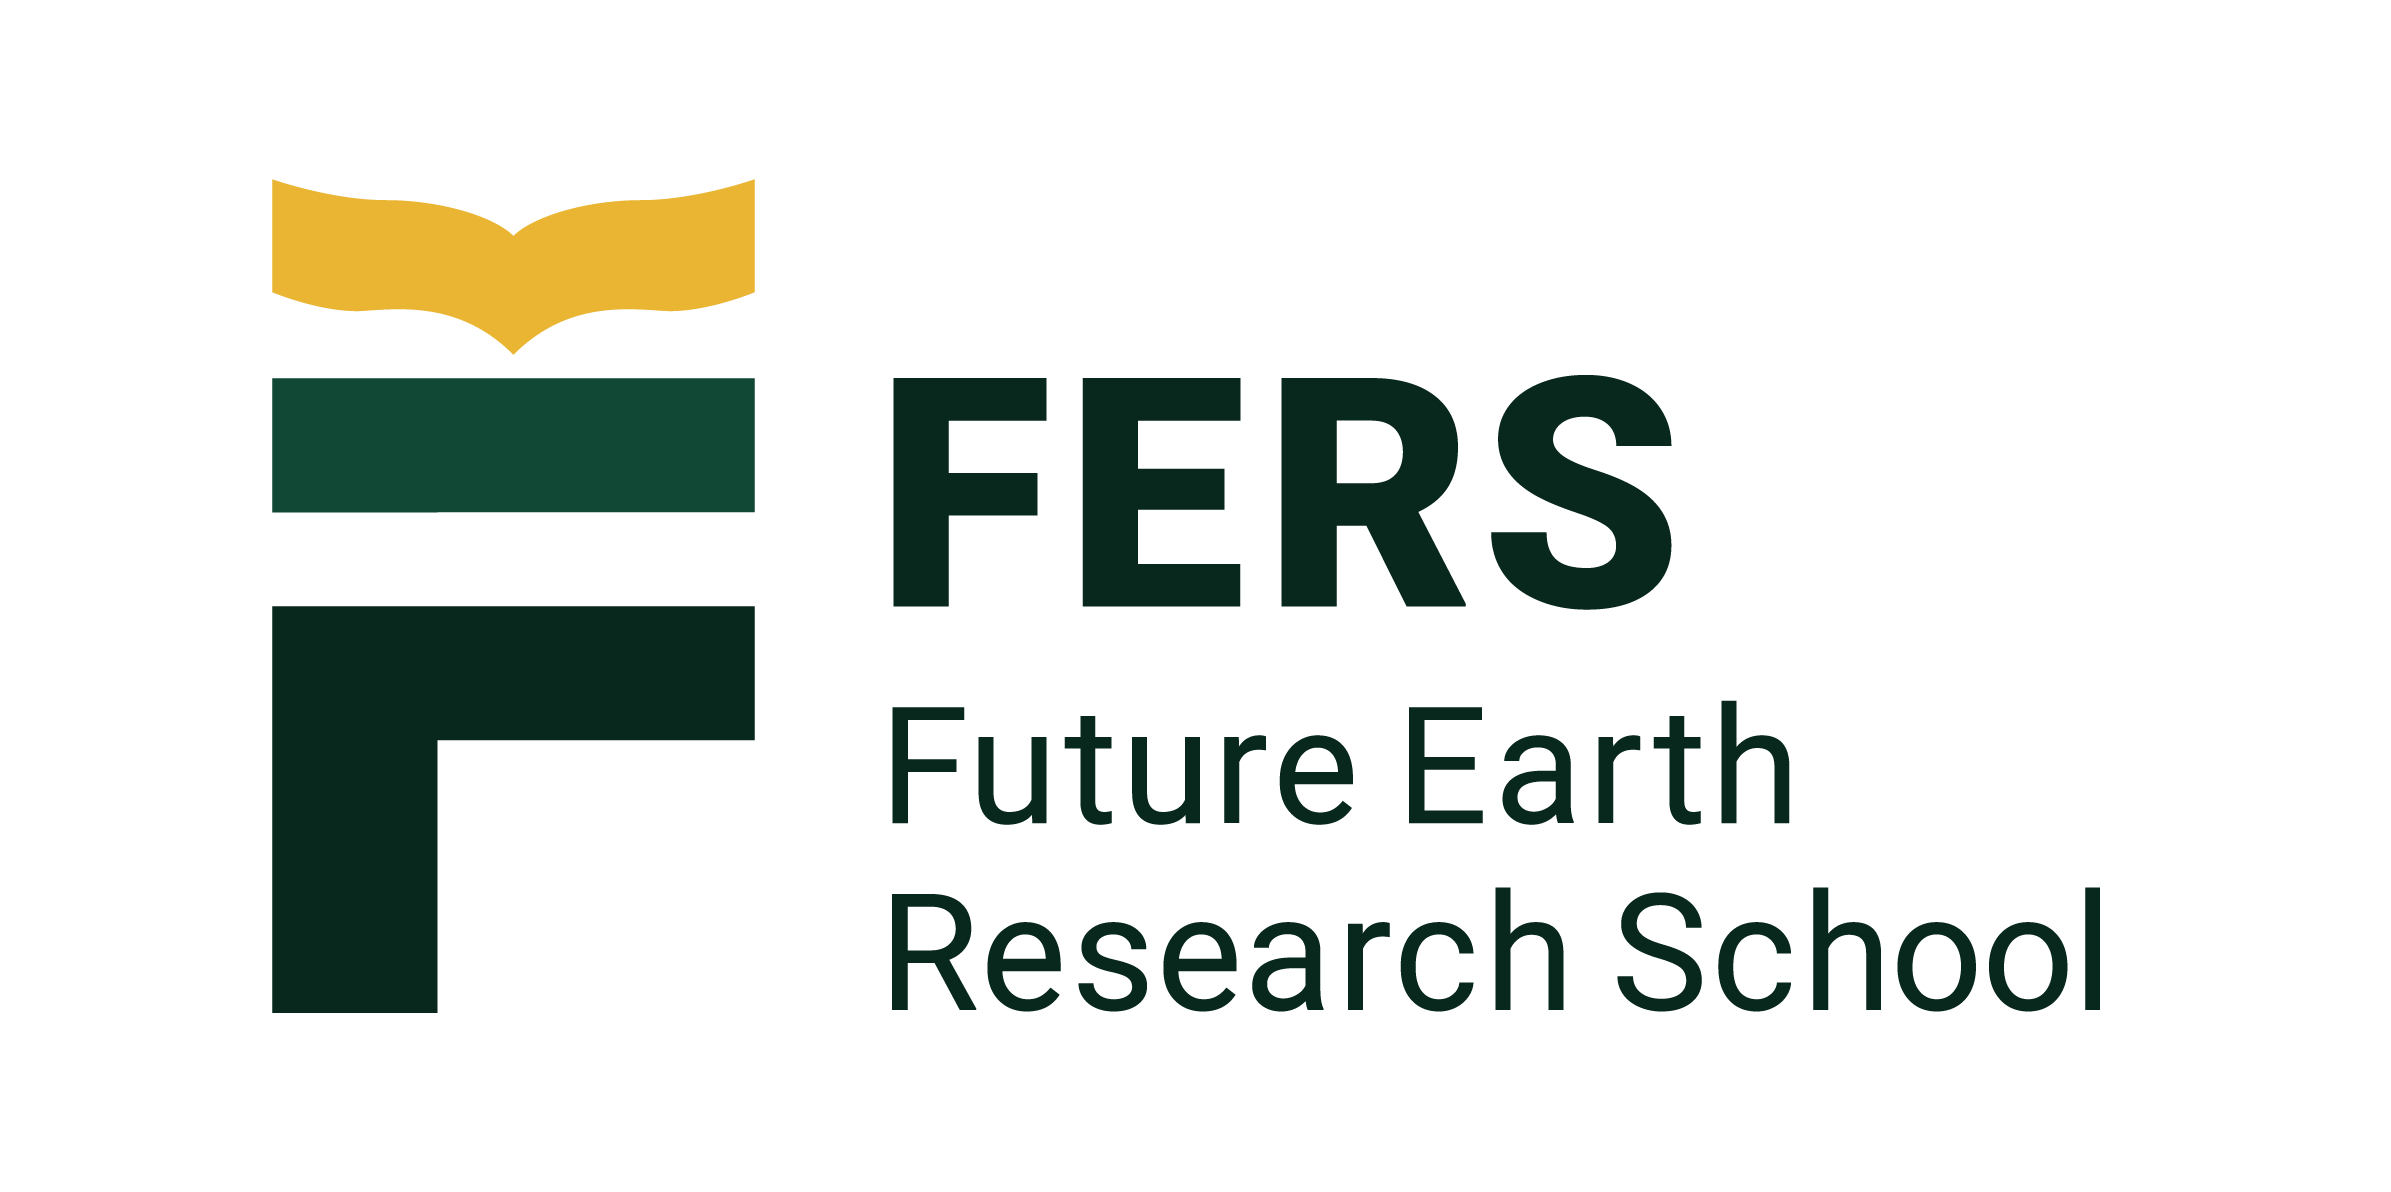 FERS - Future Earth Research School